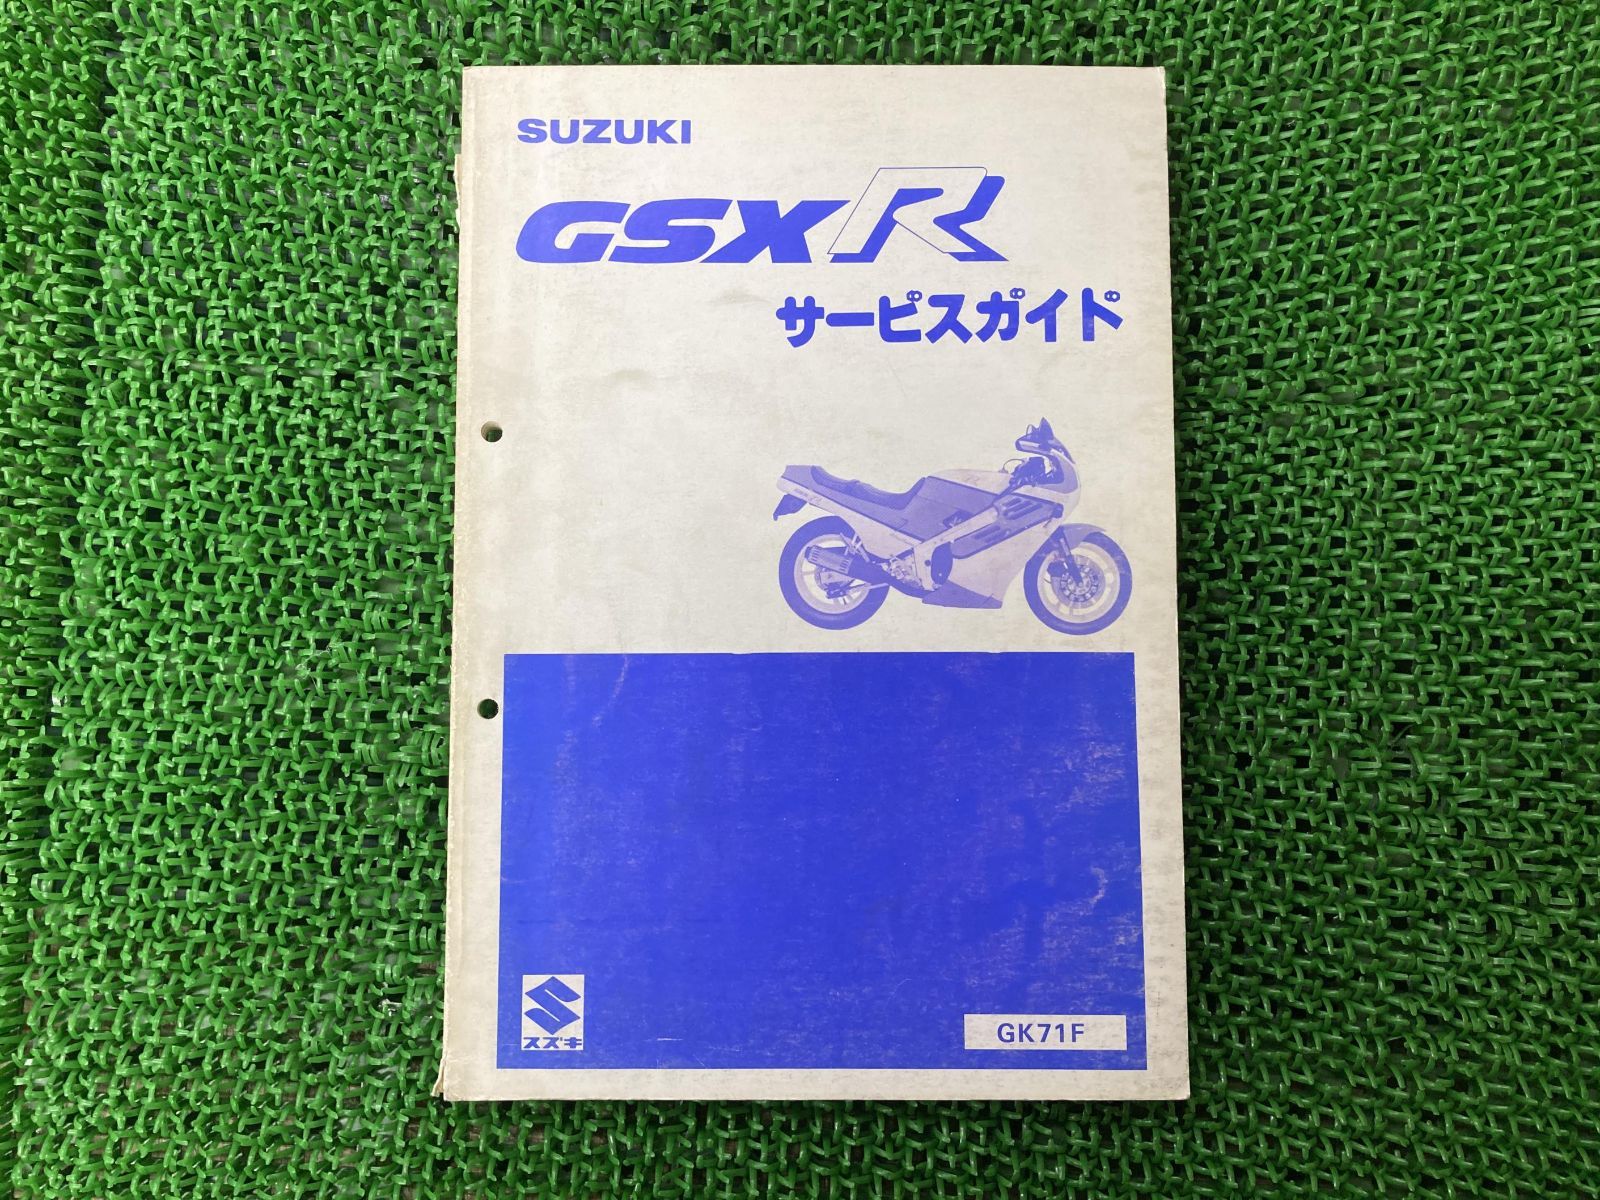 SUZUKIスズキGSX Rサービスガイド GK71F - カタログ